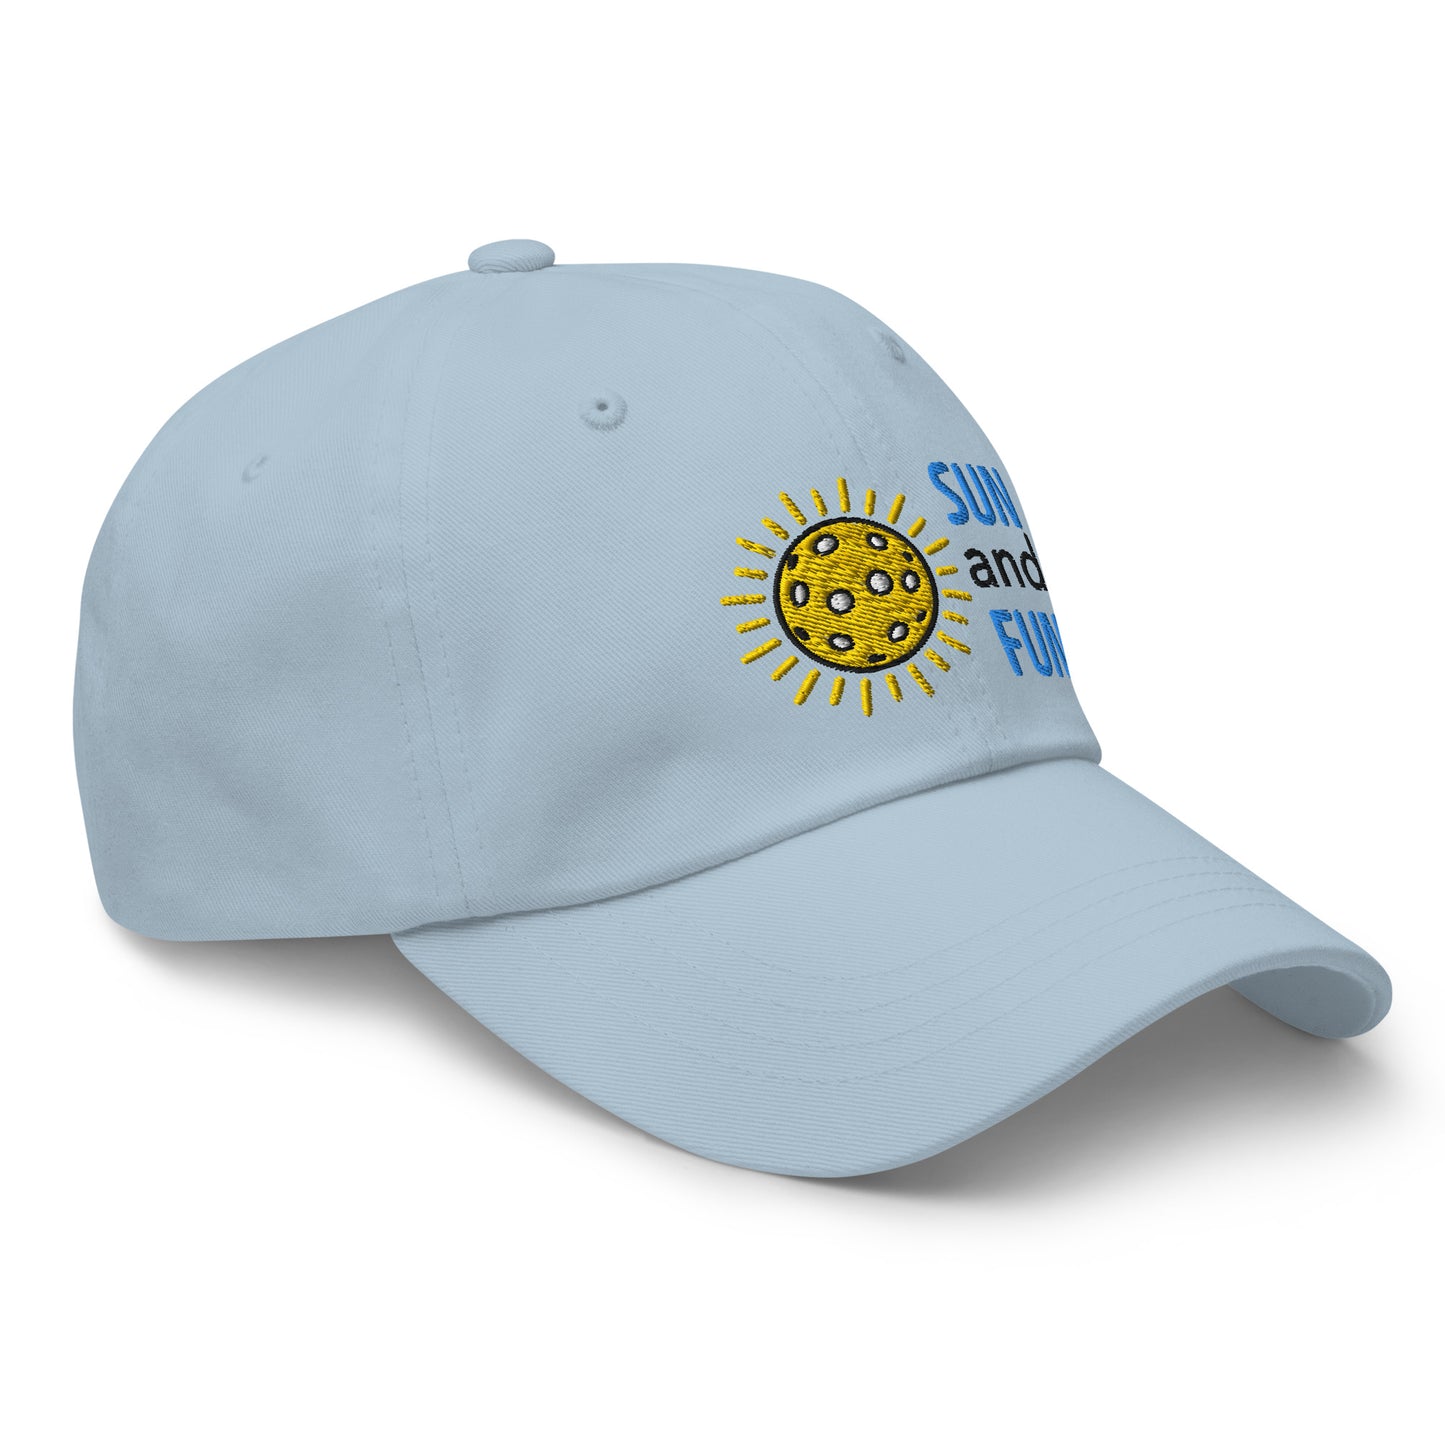 Cotton Twill Classic Cap: Embroidered Hat Pickleball Sun and Fun (more colors)